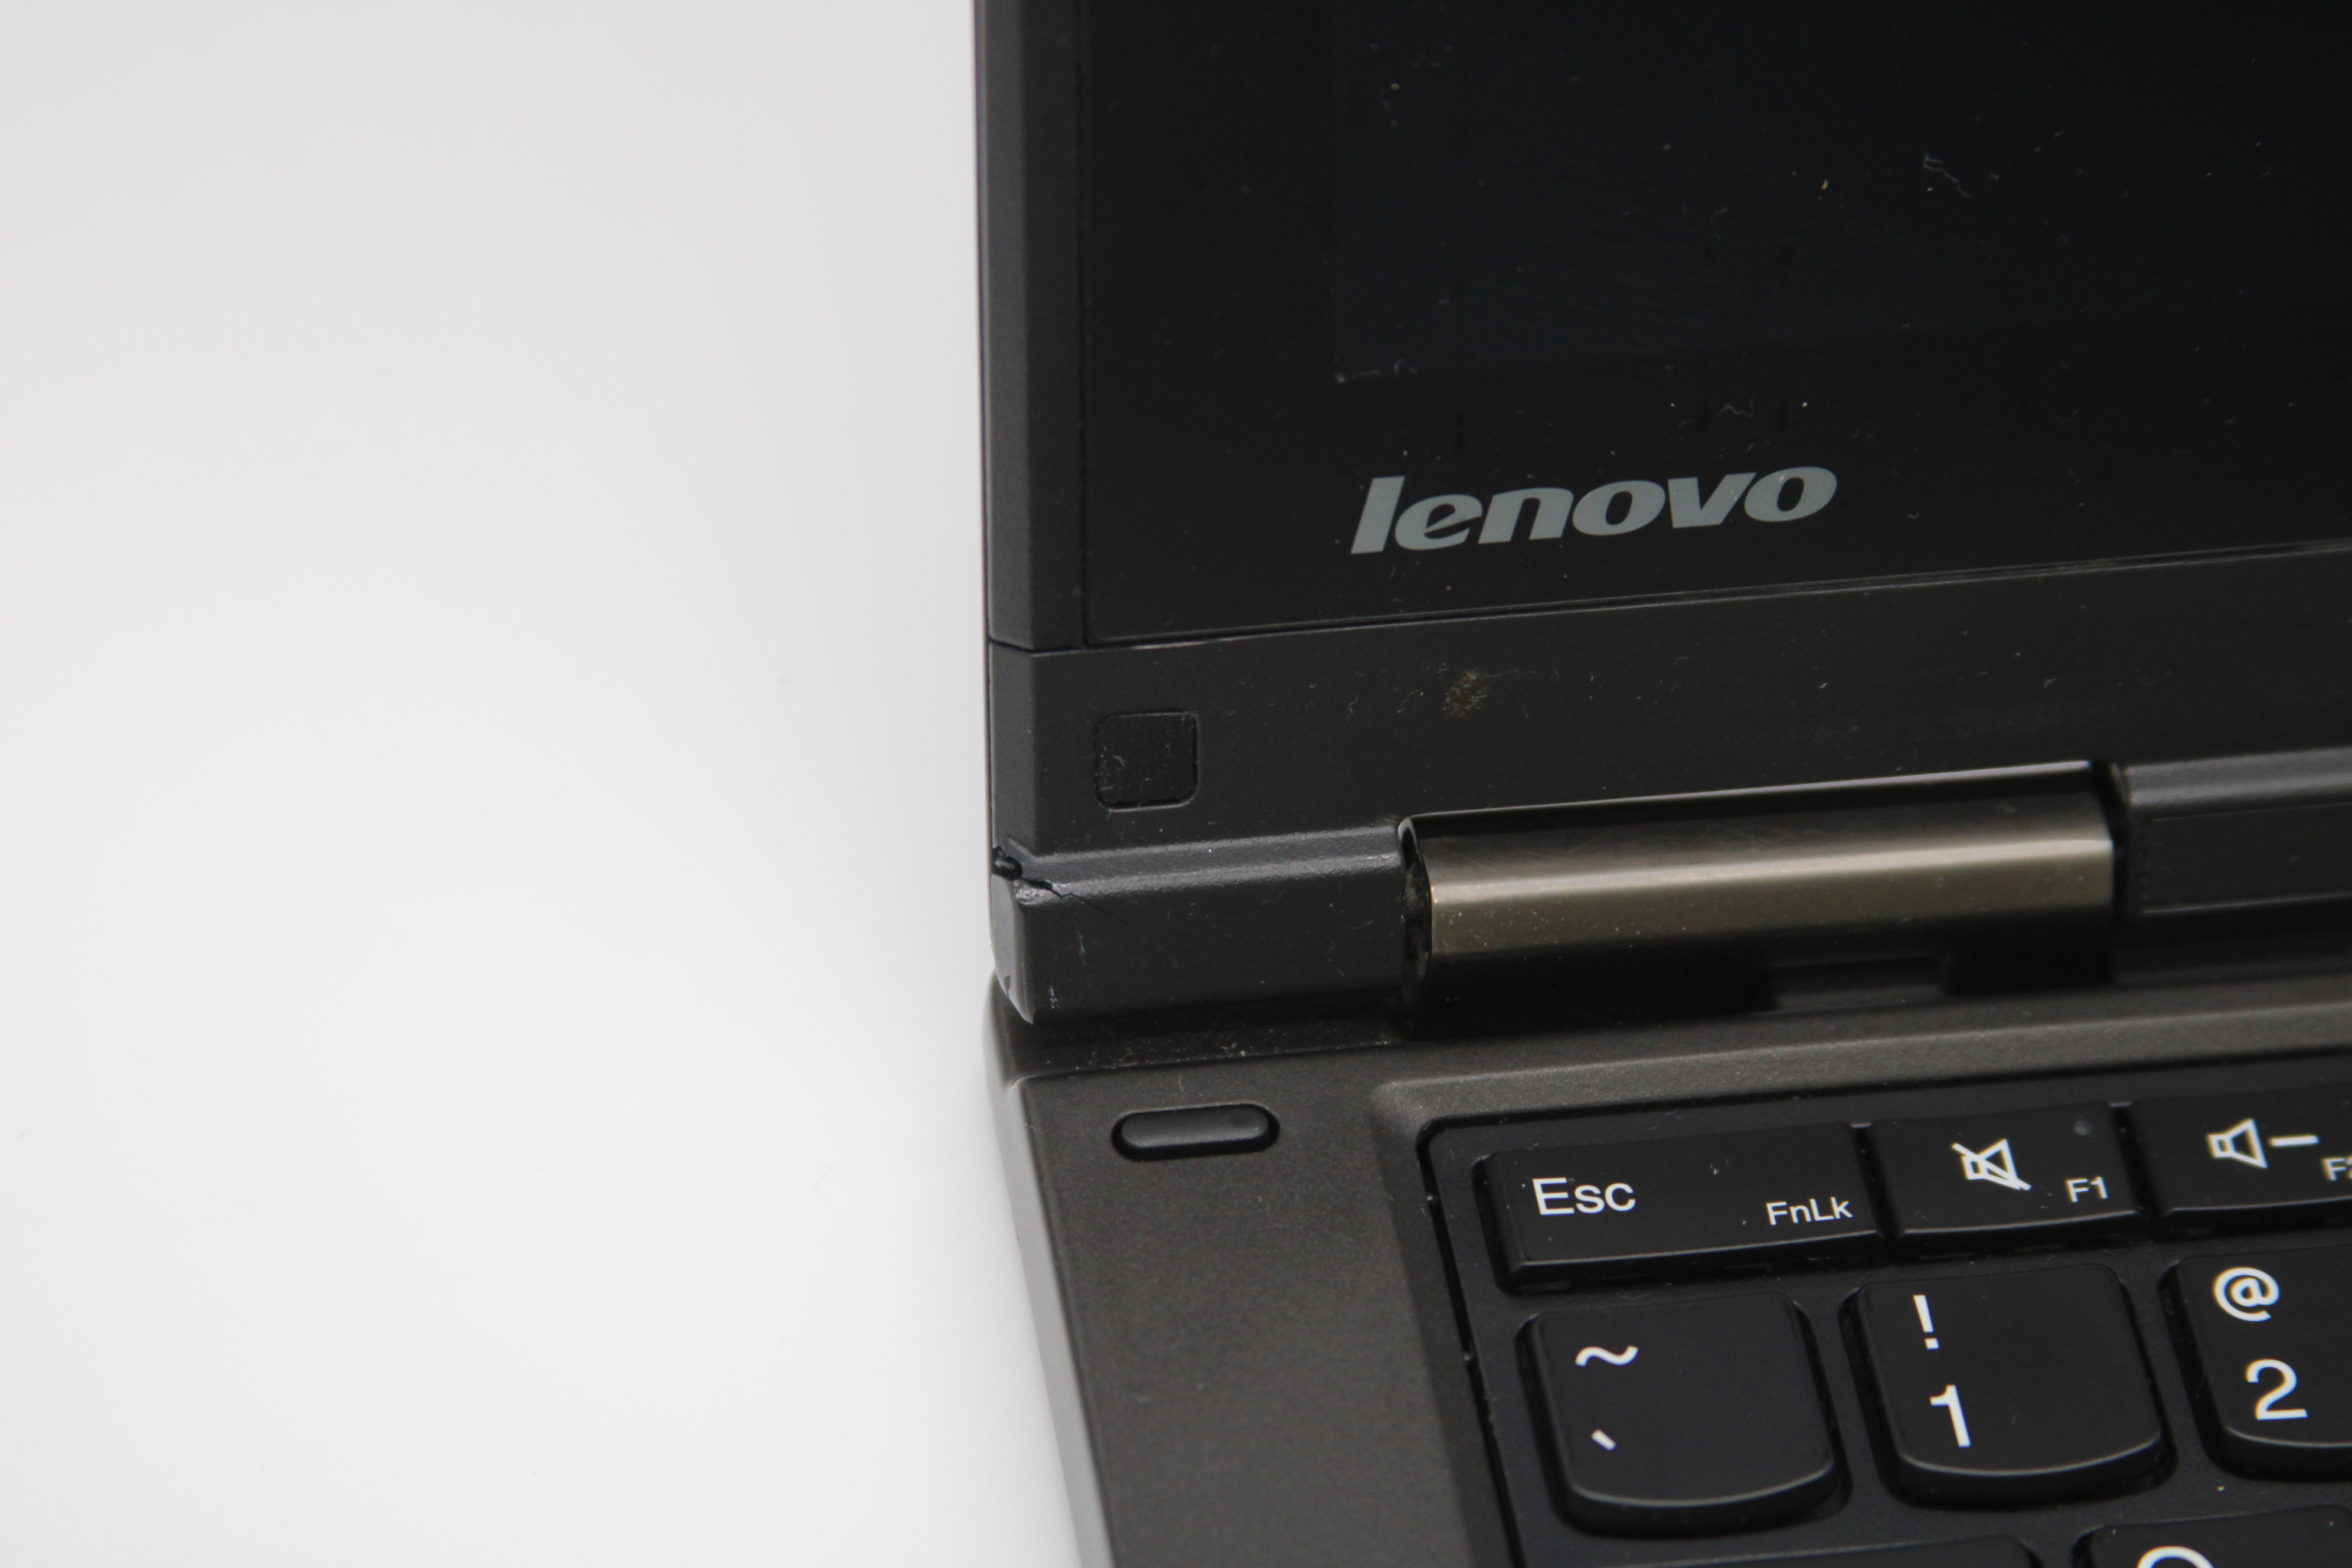 Lenovo Thinkpad Yoga 12 Type 20DK I5-5200U 2.20GHz 4GB 256GB SSD Win10 Pro